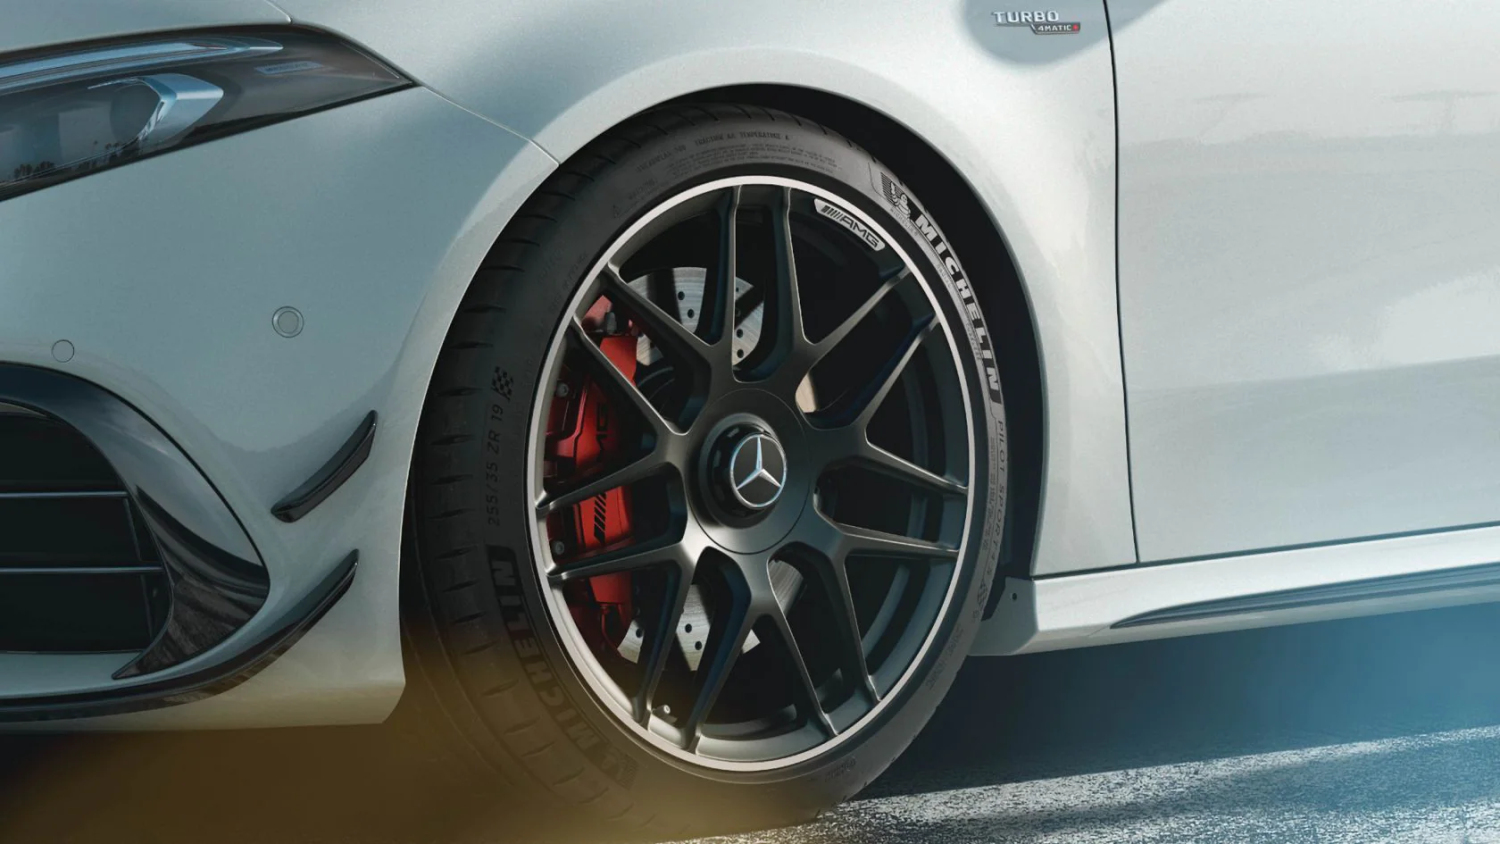 48.3cm (19-inch) AMG multi-spoke light-alloy wheels